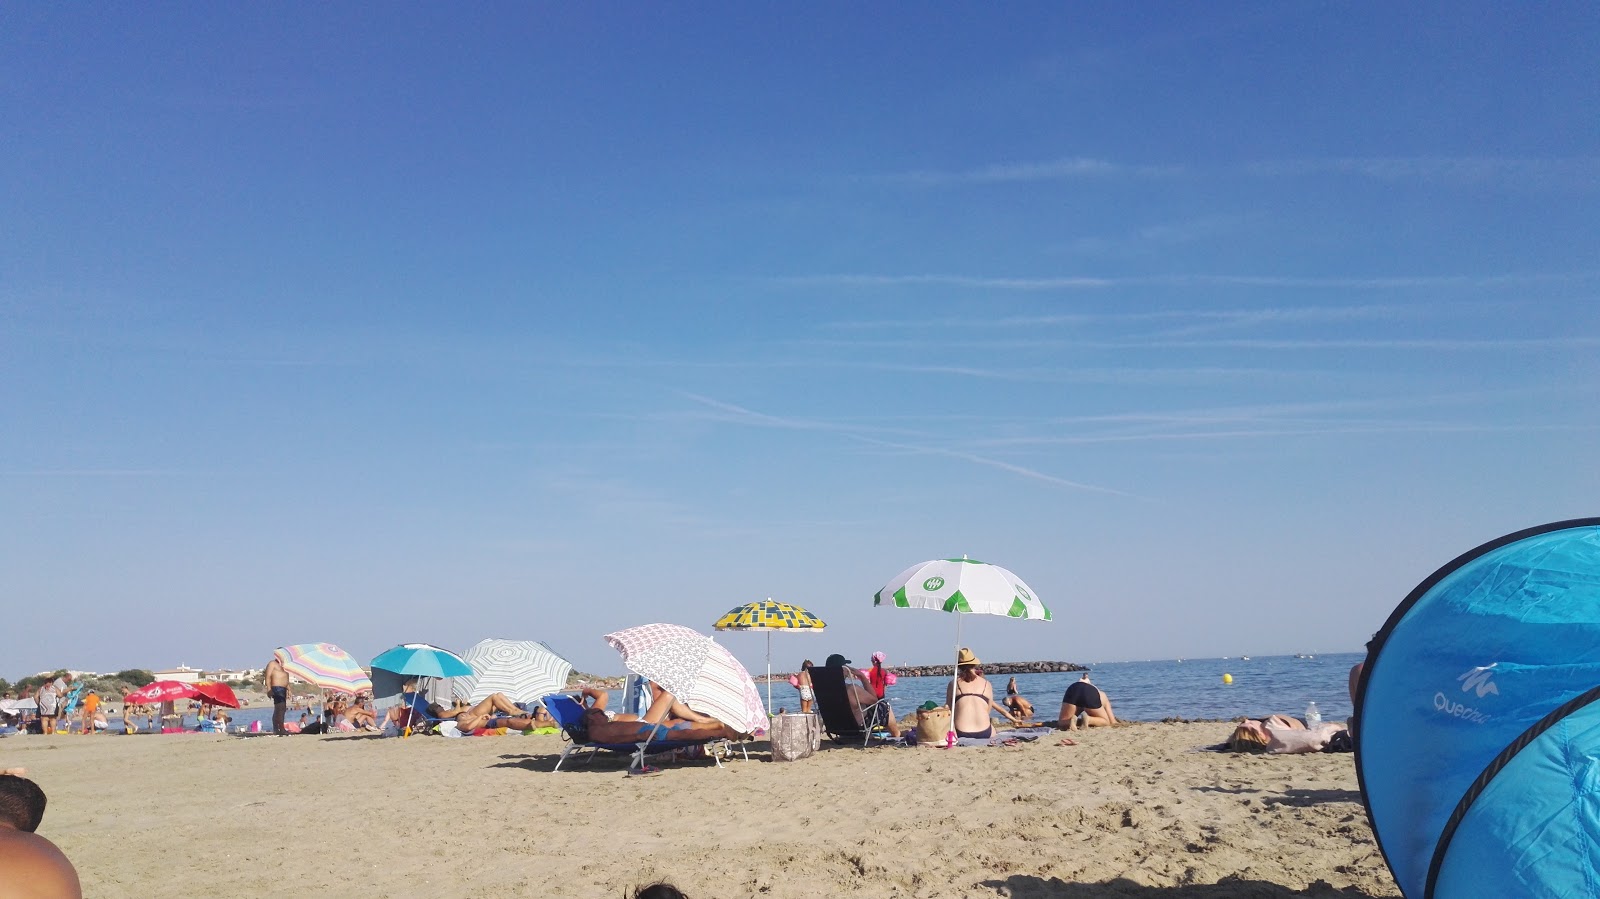 Foto af Baie de l'Amitie beach - populært sted blandt afslapningskendere